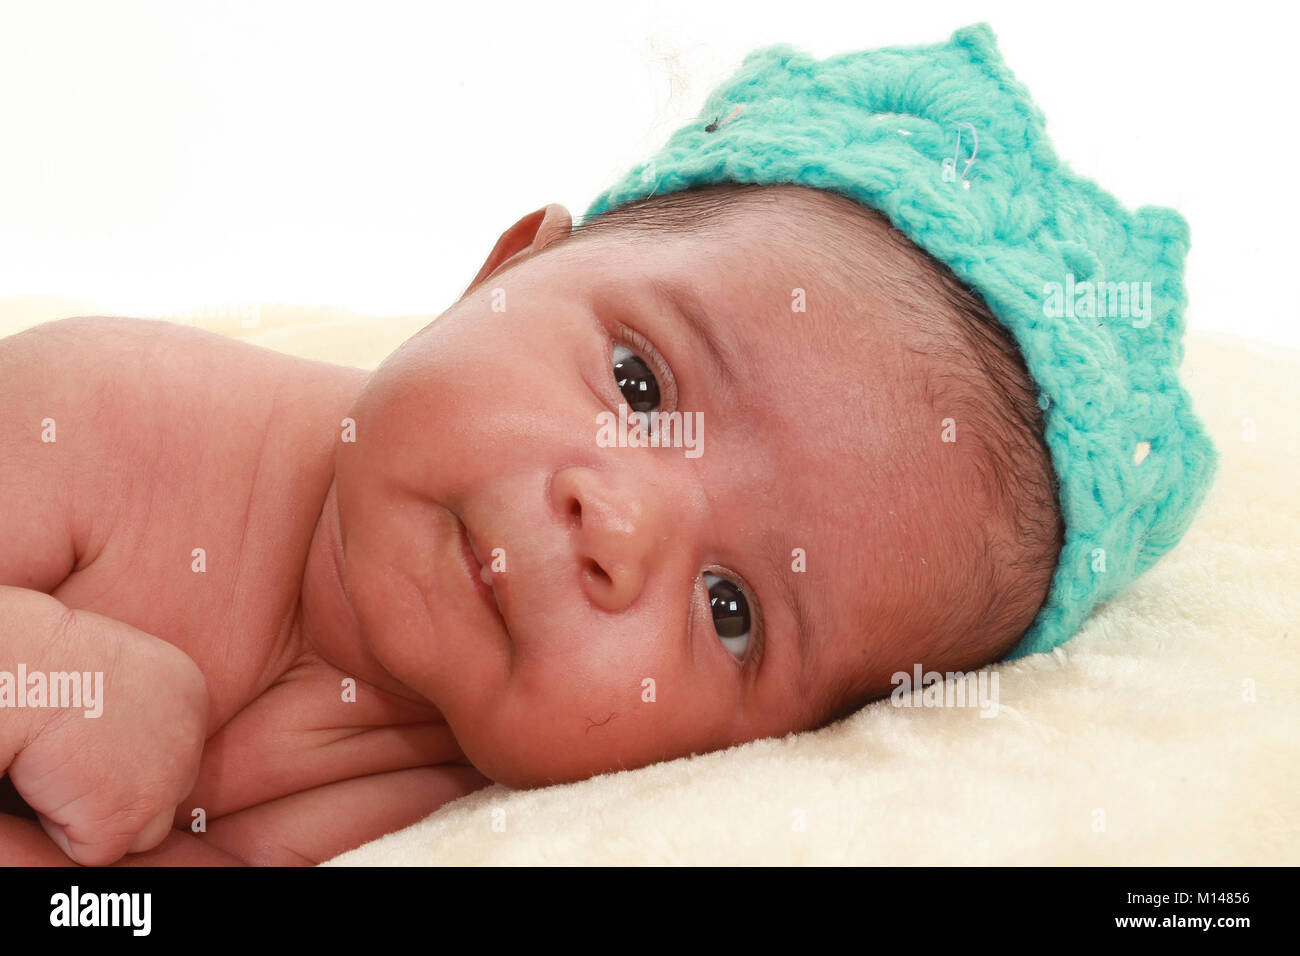 Måler Antage Over hoved og skulder newborn 3 week old mixed race baby boy cosy in nursery Stock Photo - Alamy